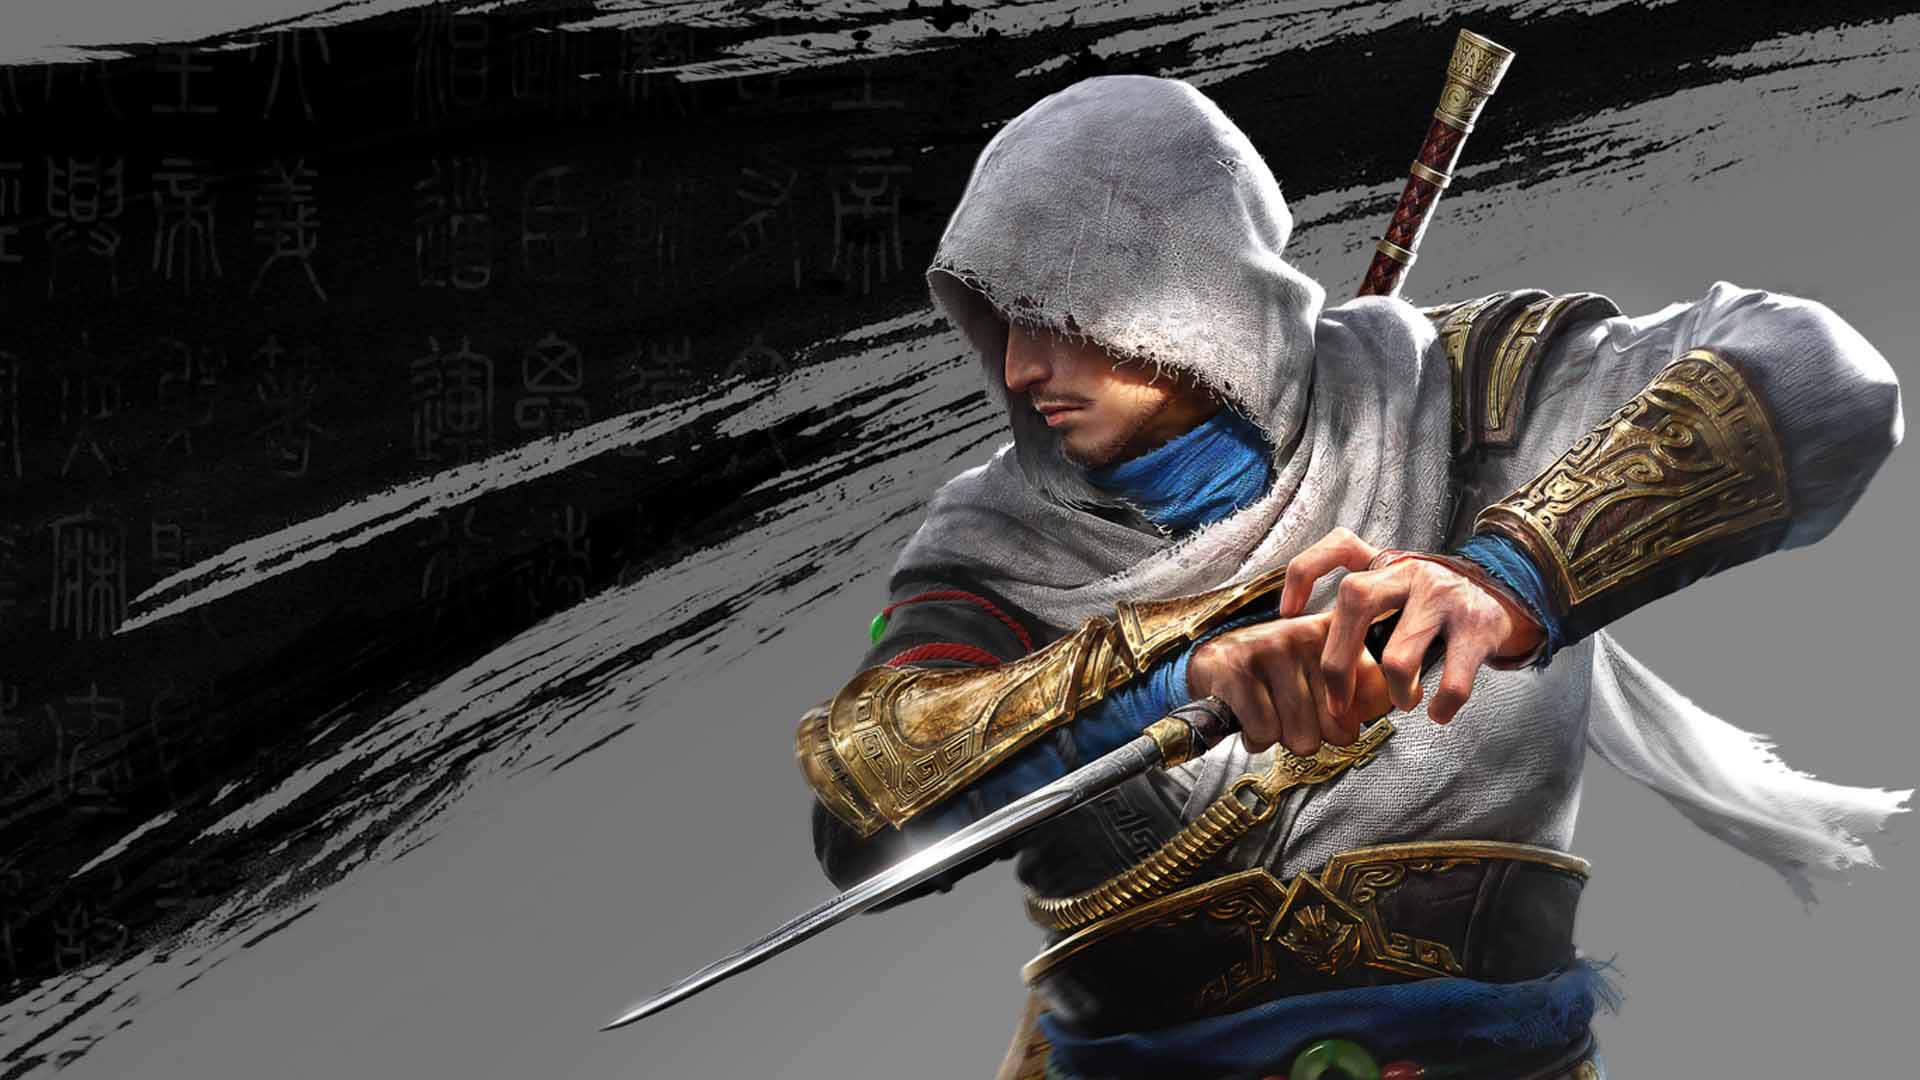 Assassin's Creed Mirage Gameplay and Release Rumors & Assassin's Creed VR  Nexus Rumors + Roadmap 